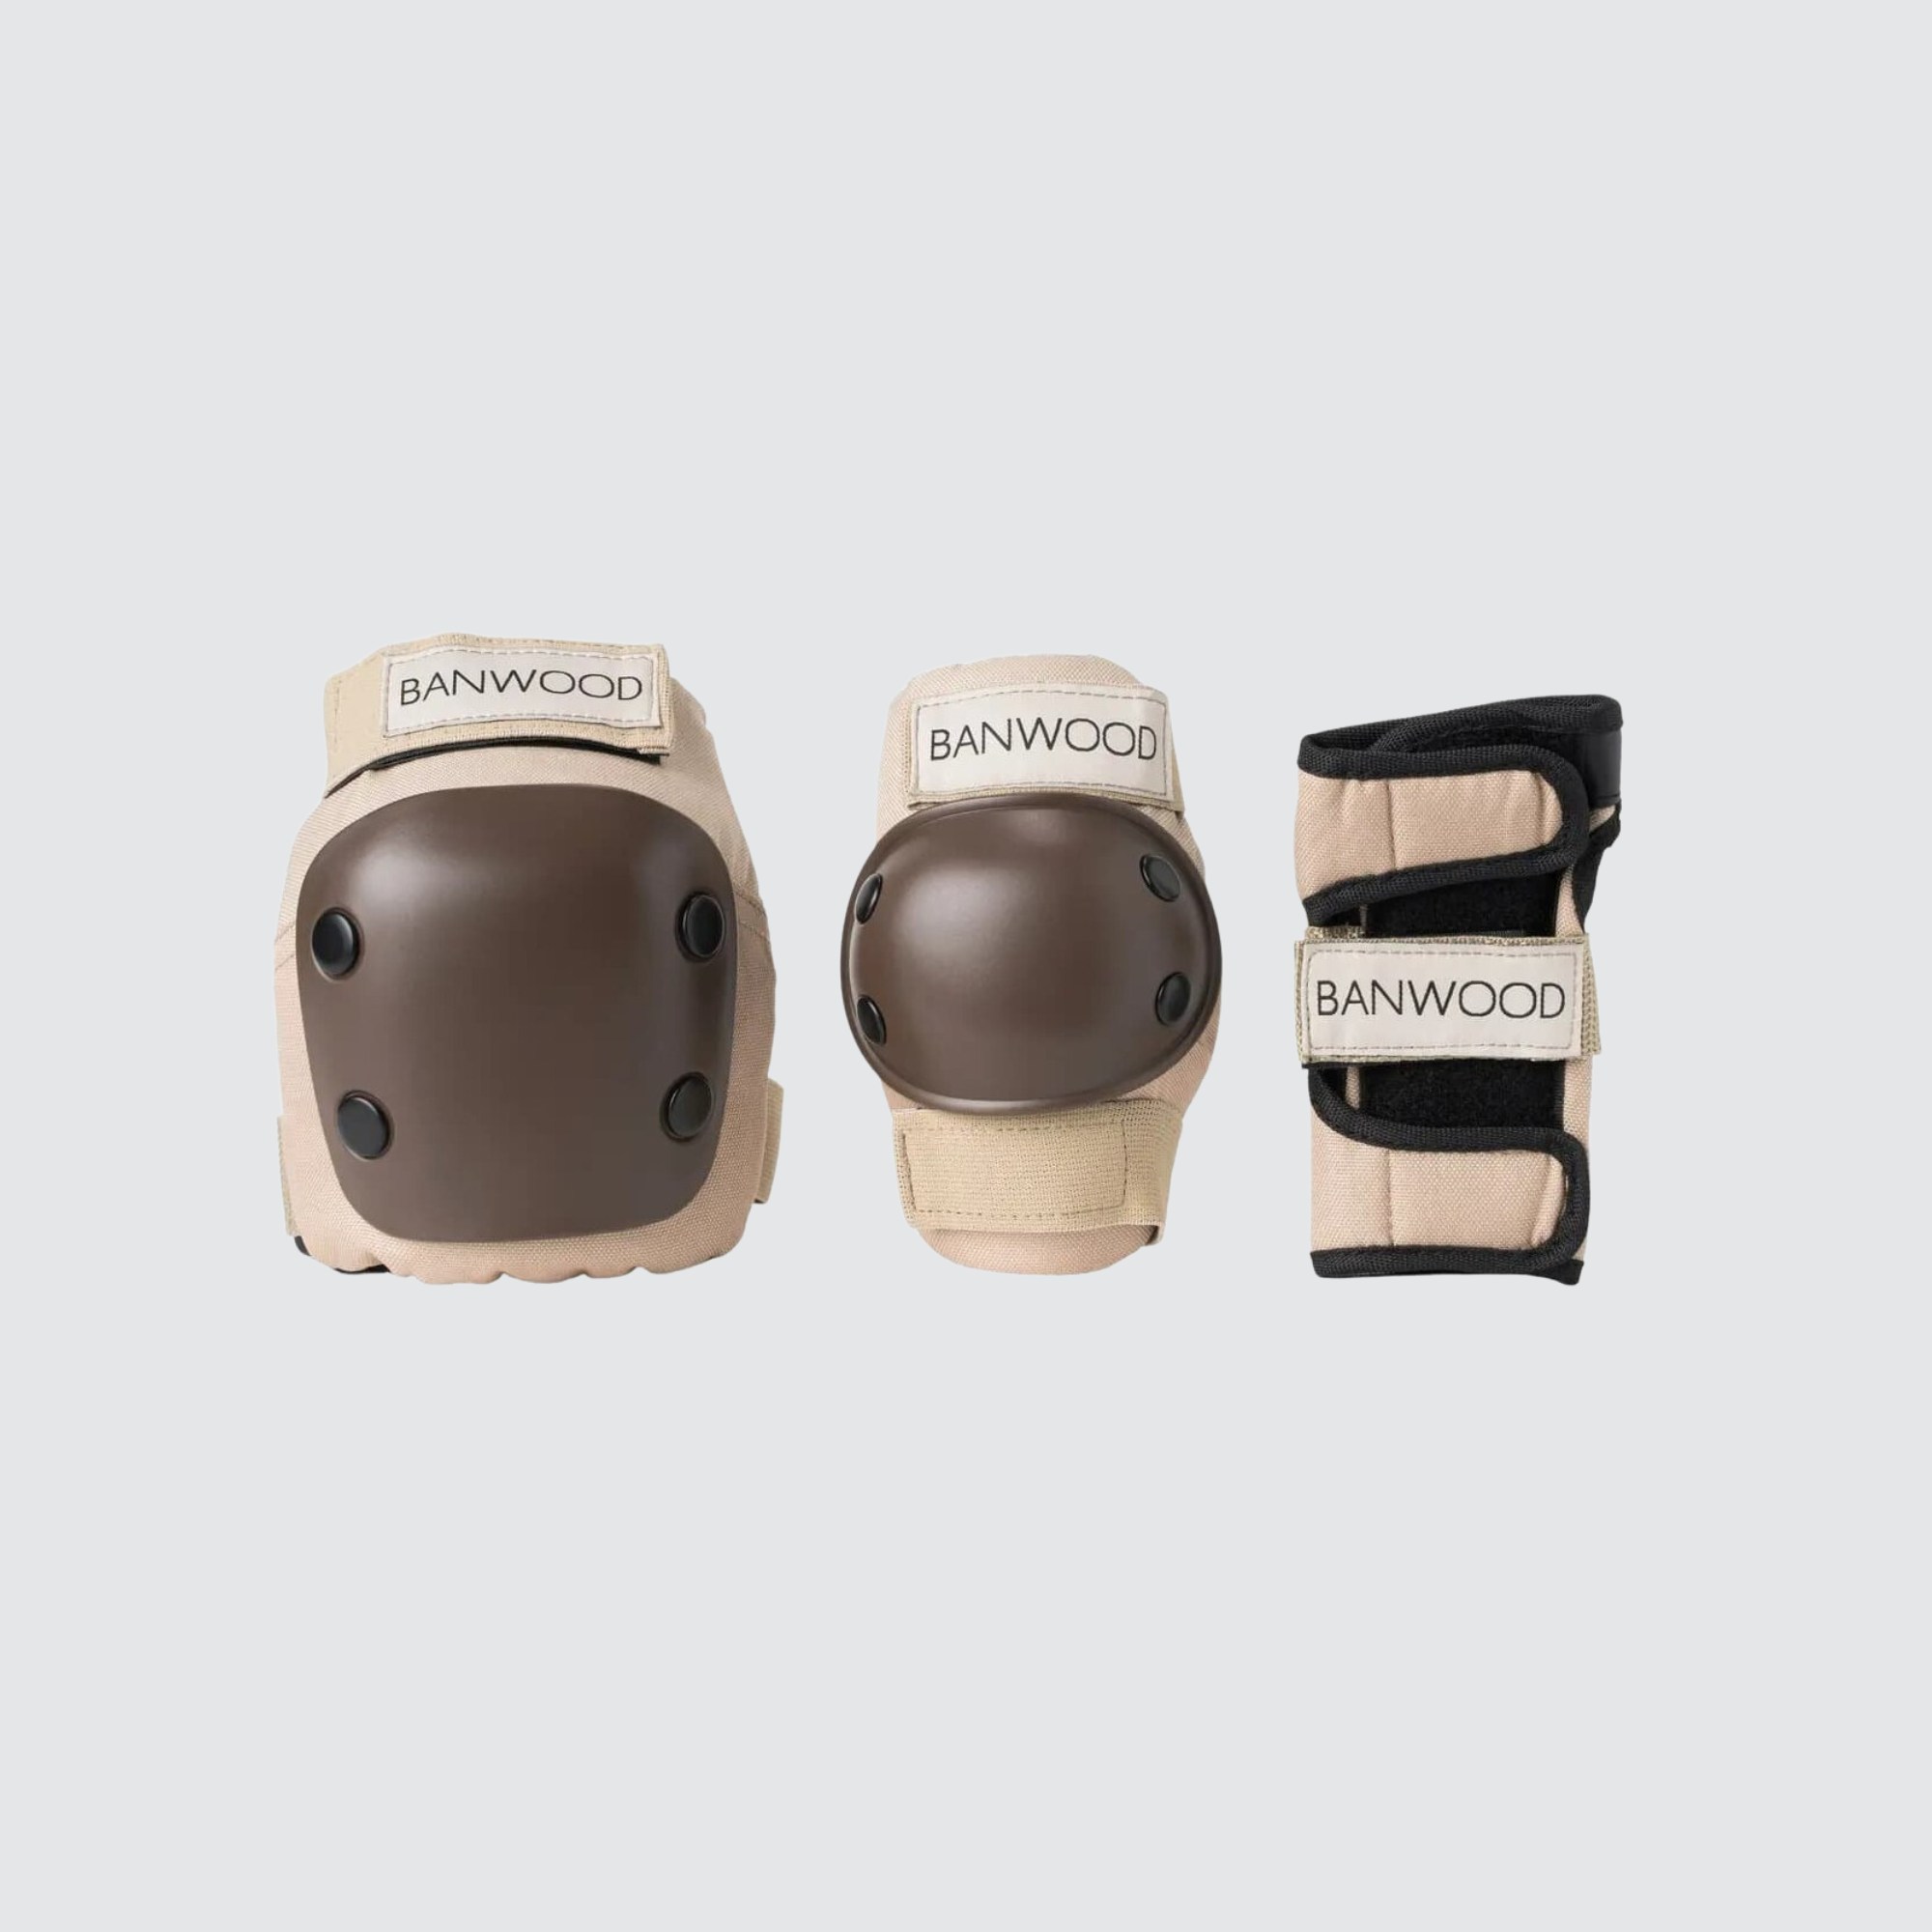 Banwood protective gear knee and wrist pads